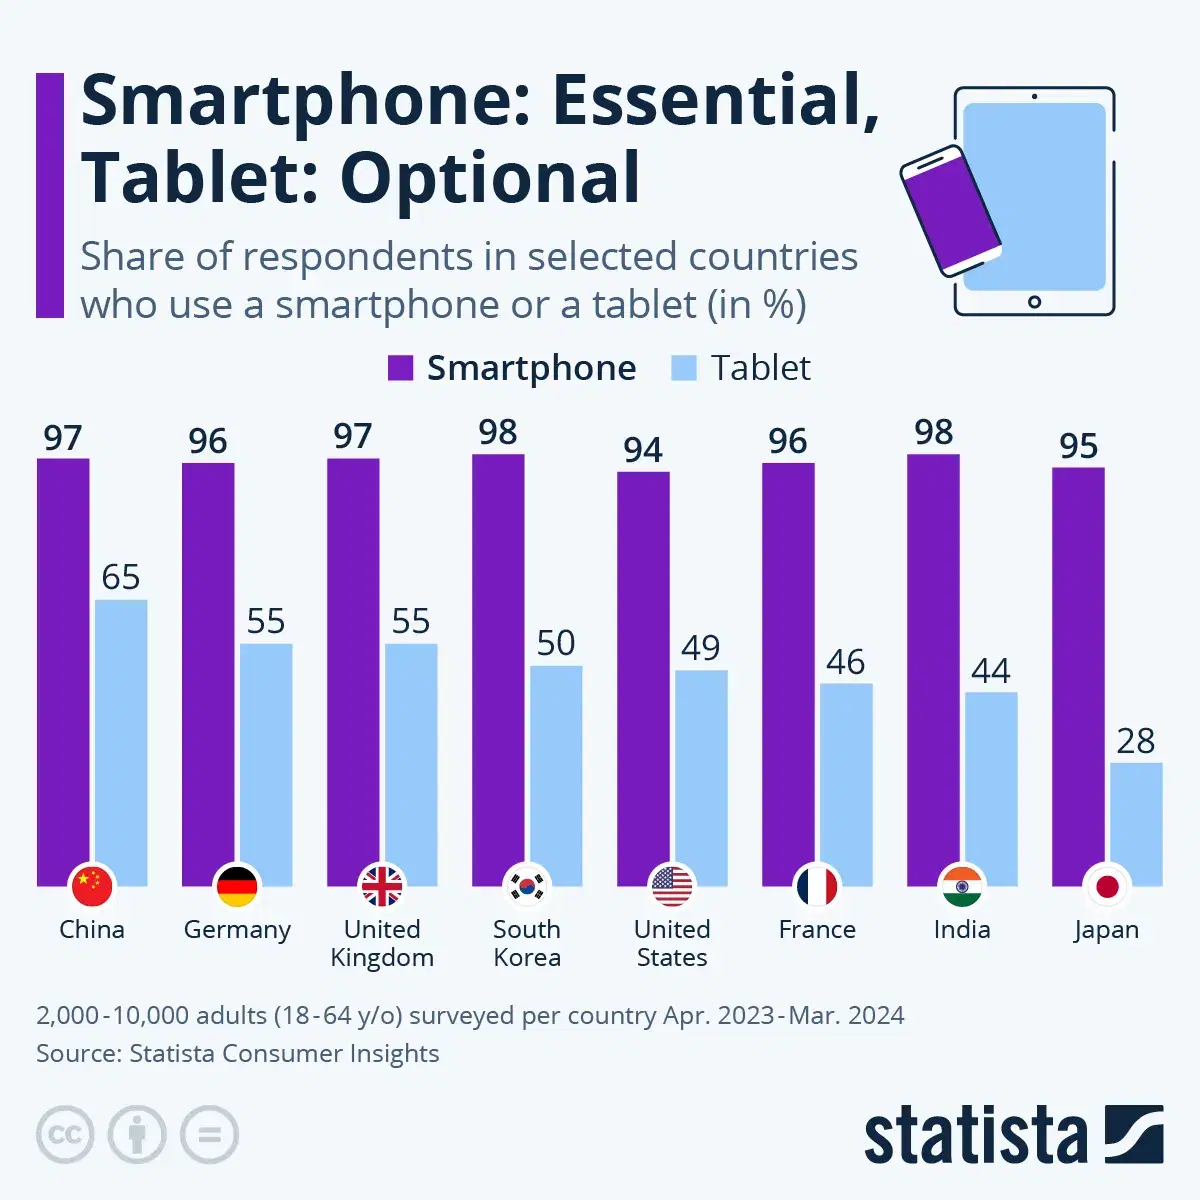 Smartphone: Essential, Tablet: Optional